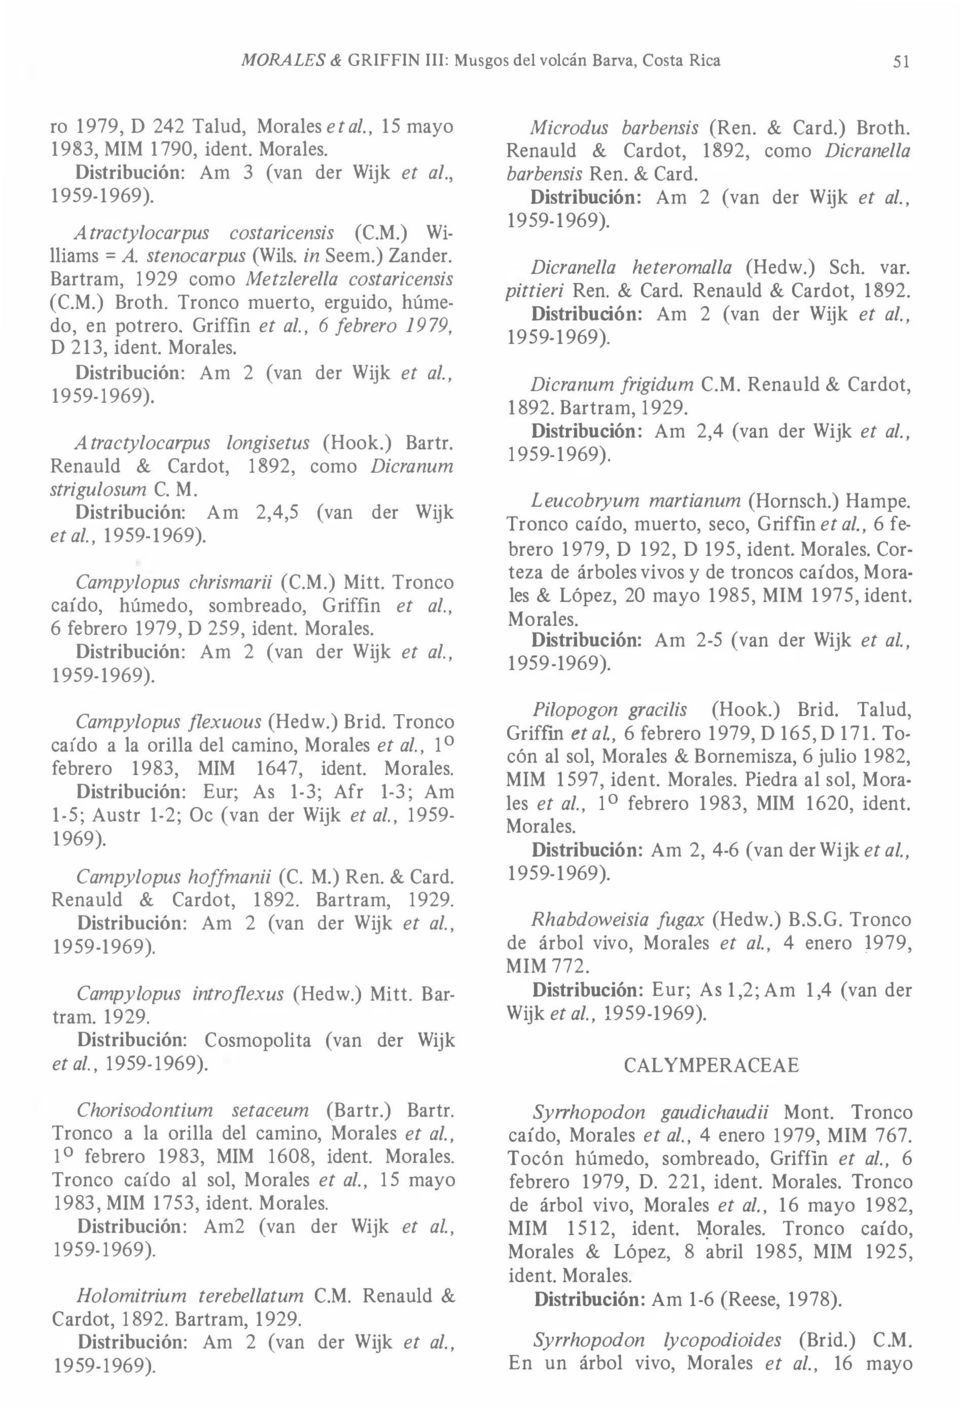 Griffin et al., 6 febrero 1979, D 213, ident. A tractylocarpus longisetus (Hook.) Bartr. Renauld & Cardot, 1892, como Dicranum strigulosum C. M. Distribución: Am 2,4,5 (van der Wijk et al.